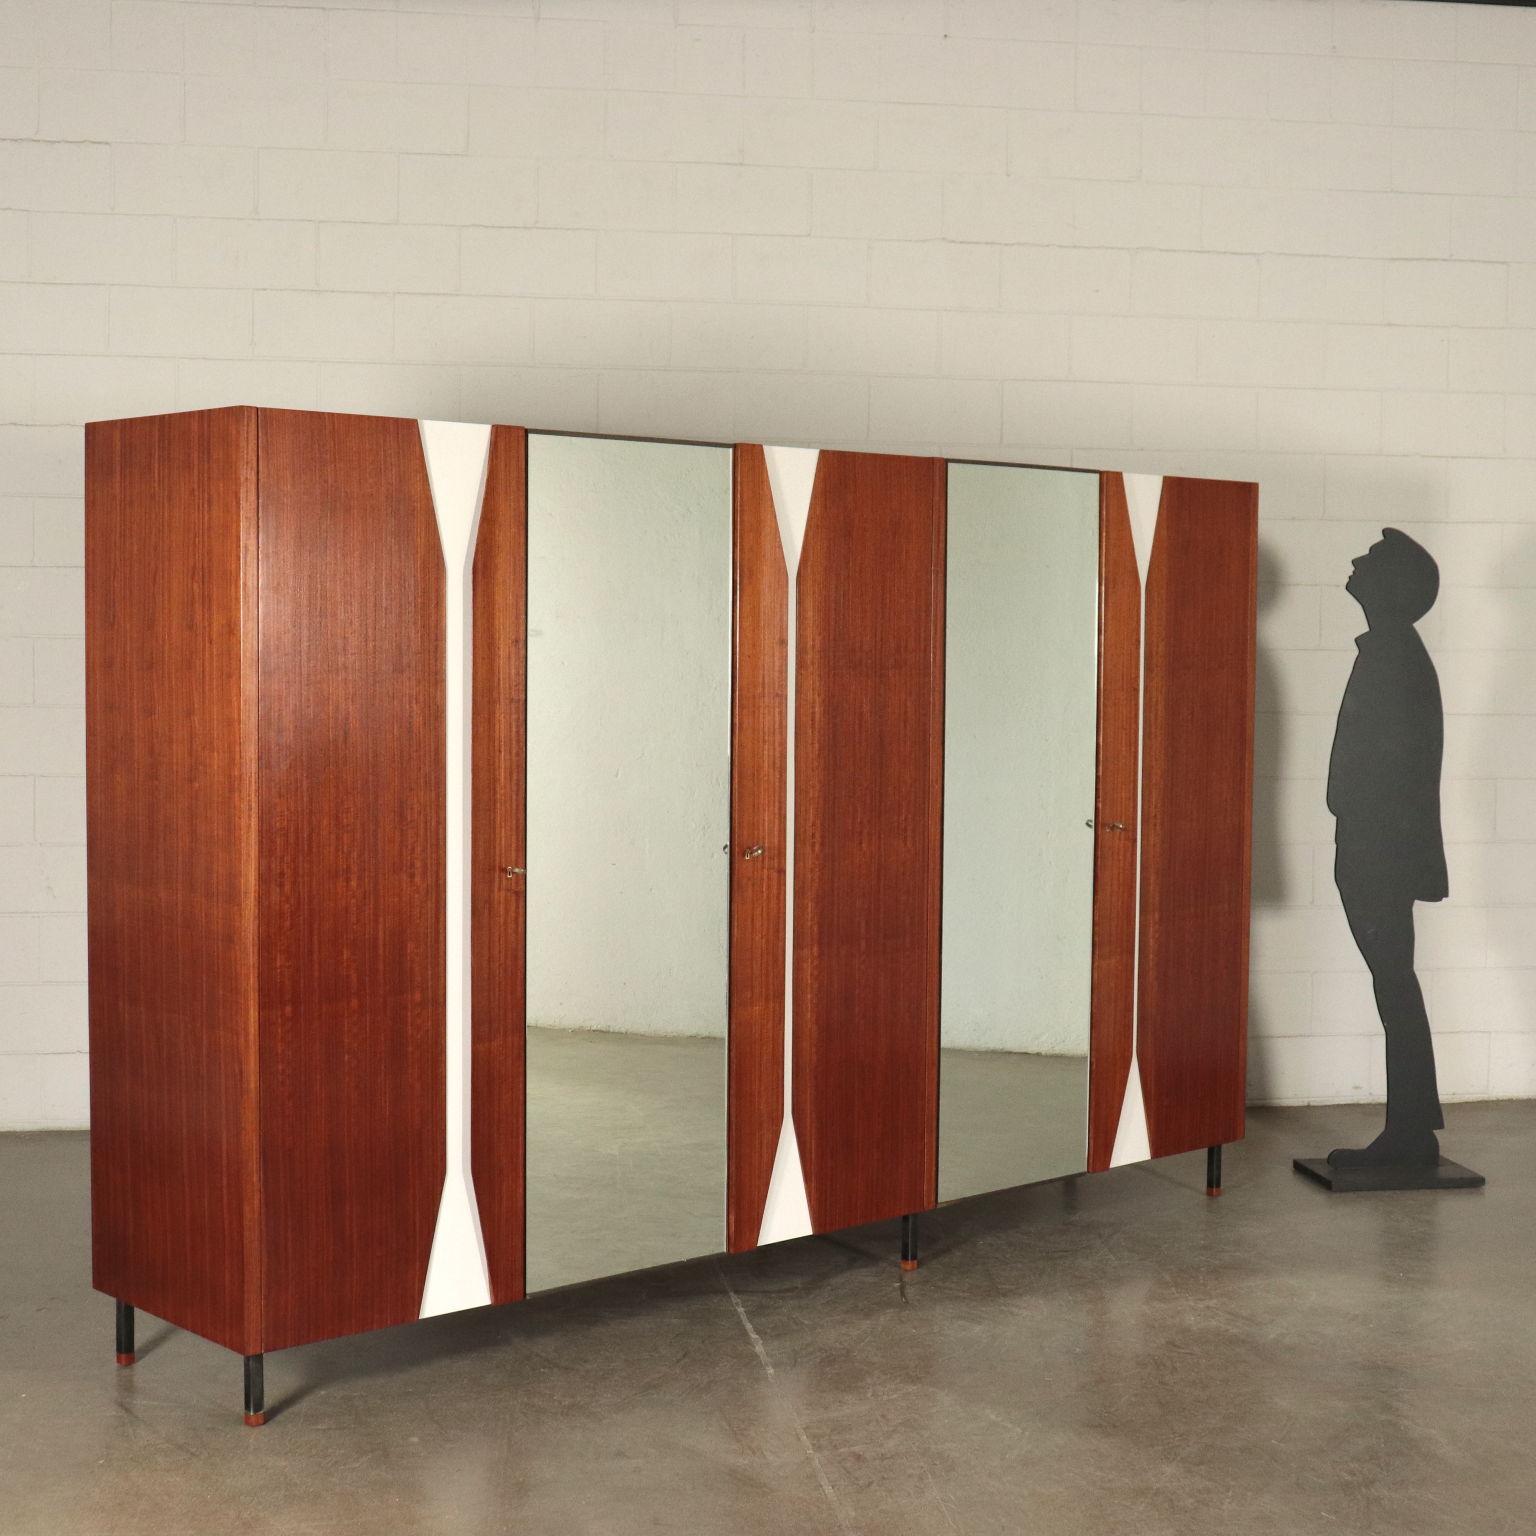 Wardrobe with 5 hinged doors, mahogany veneer, Formica inserts, mirrored glass, metal legs with wood cap.